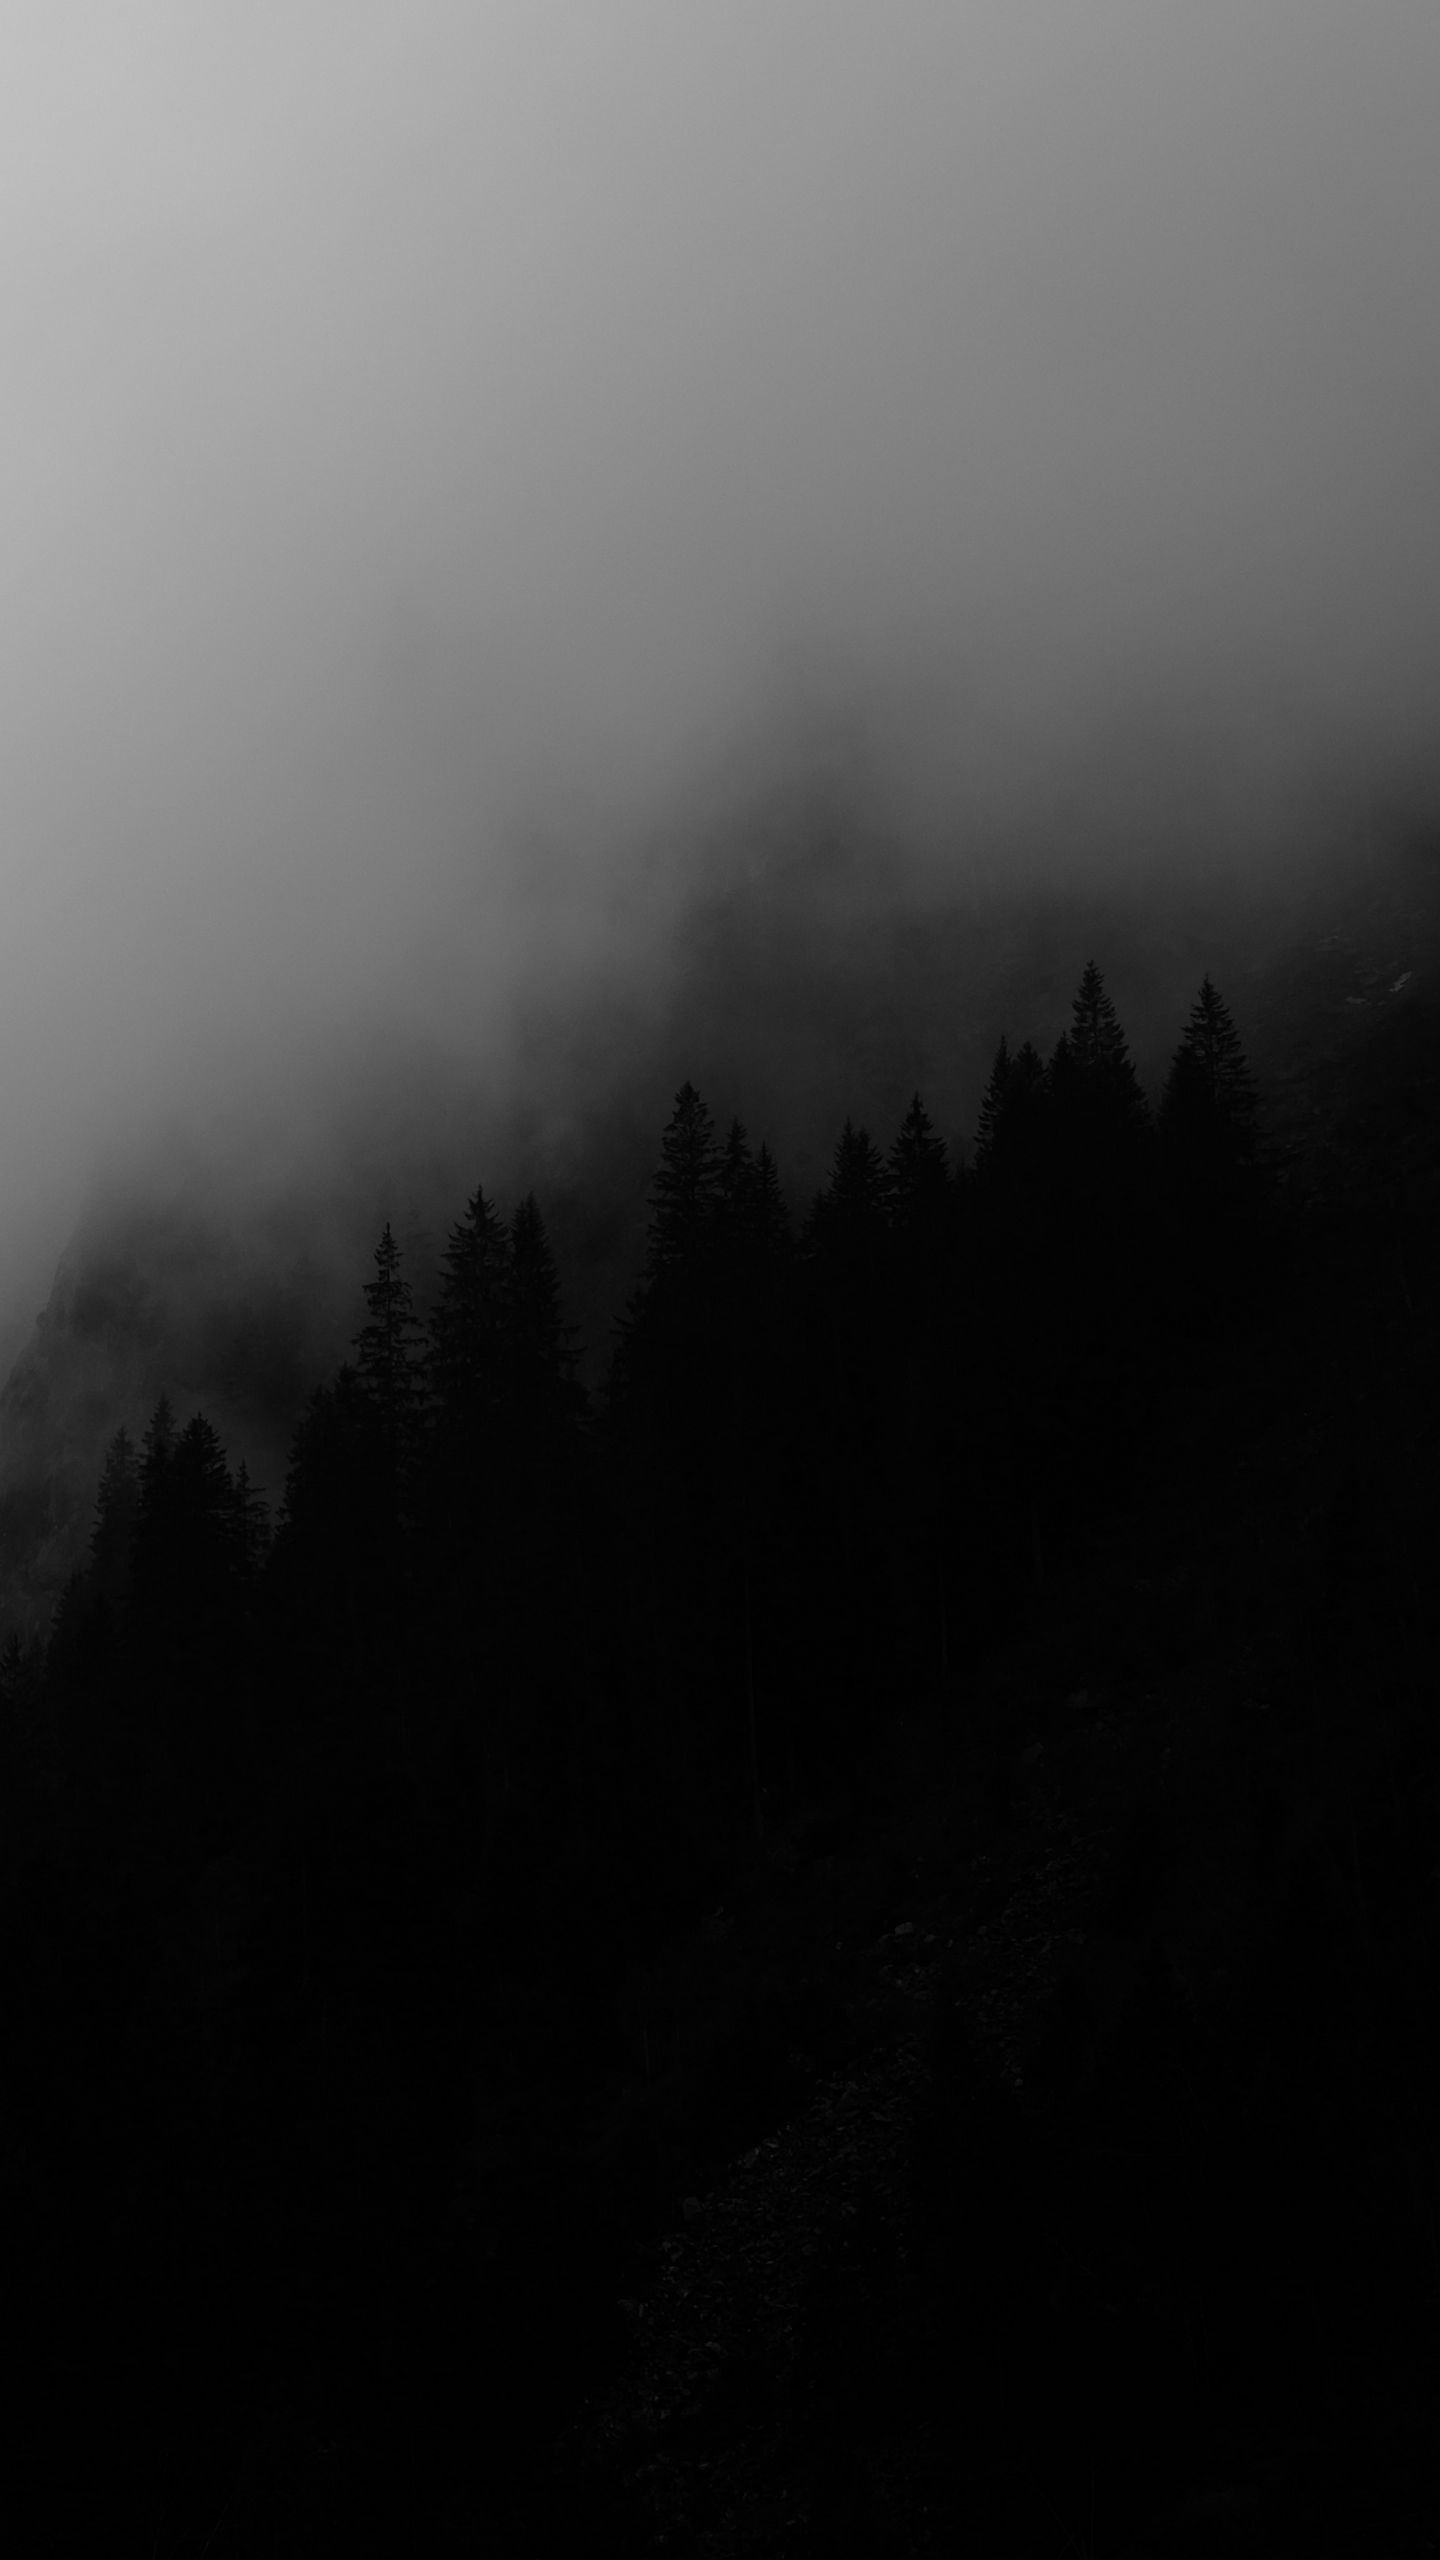 Download wallpaper 1440x2560 trees, fog, forest, bw, black qhd samsung galaxy s s edge, note, lg g4 HD background